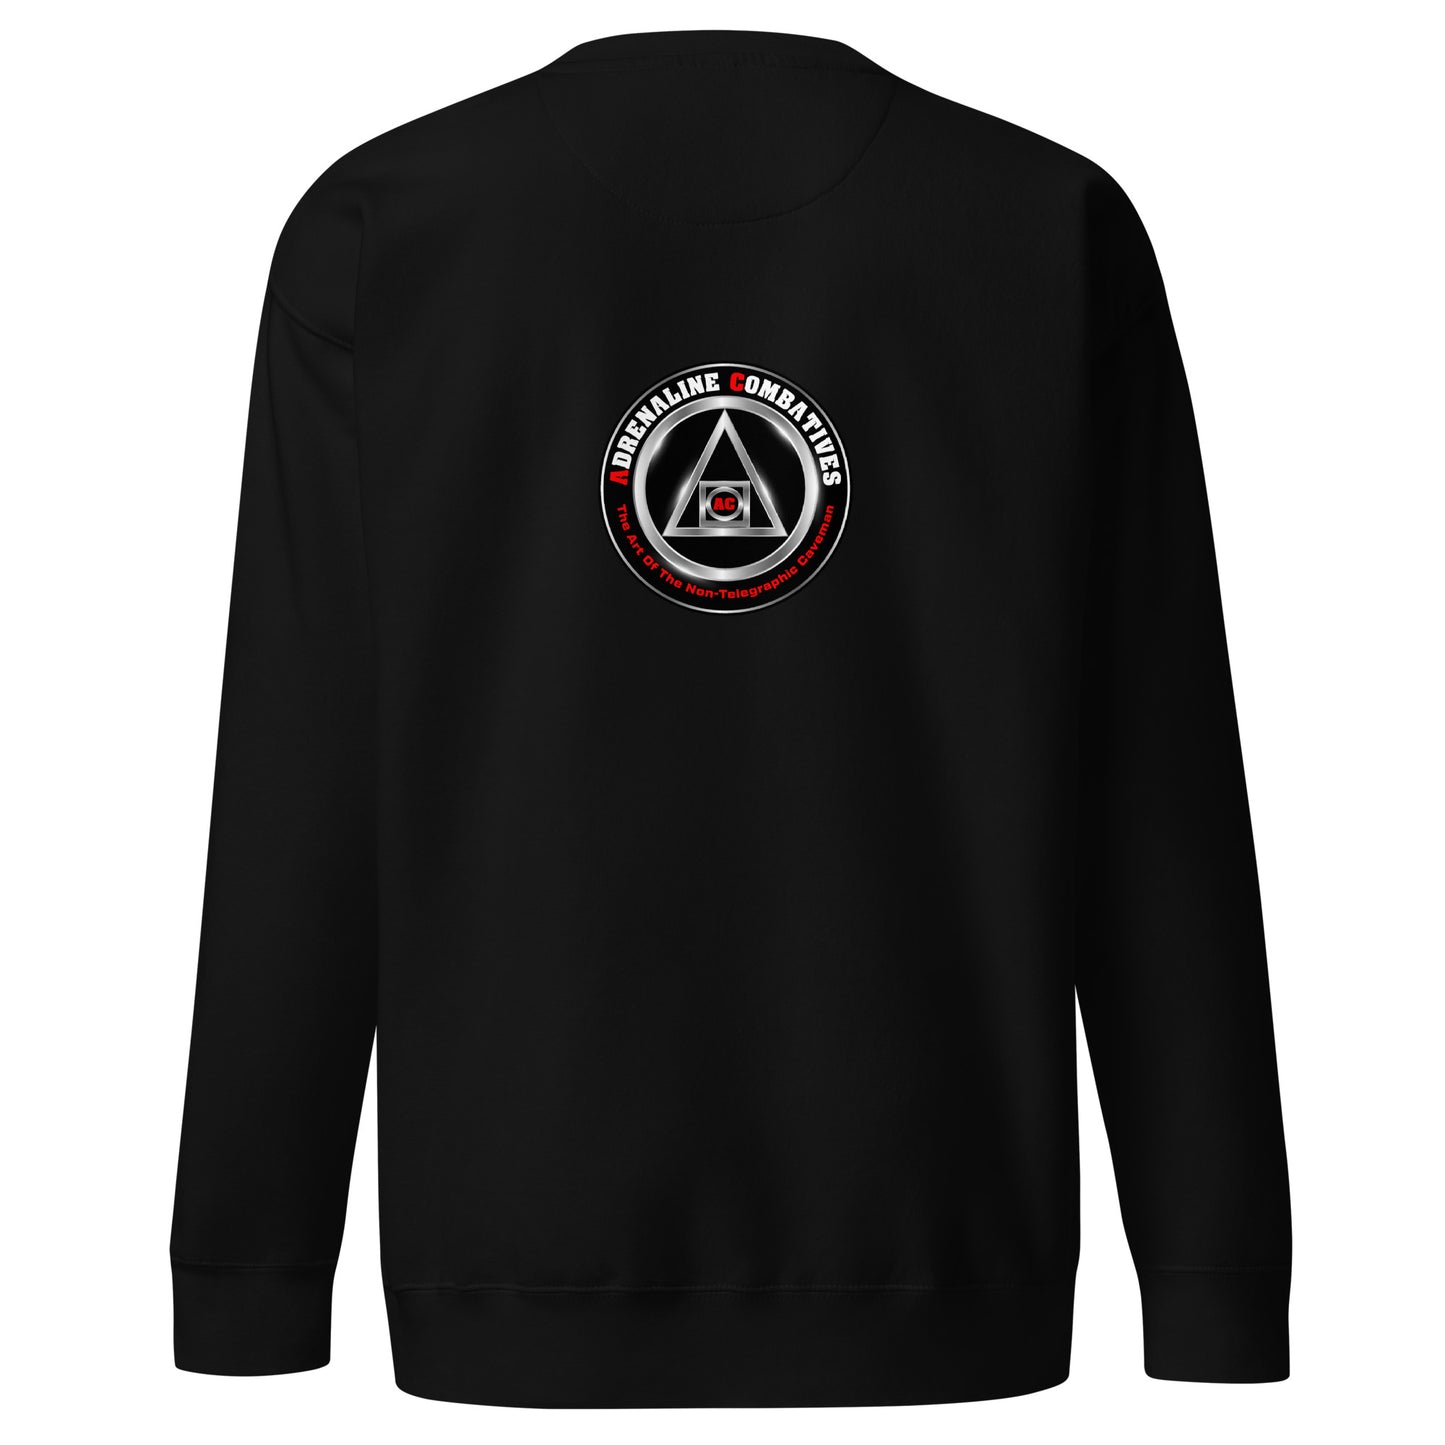 Unisex Premium Sweatshirt - Adrenaline Combatives - Logo at the back